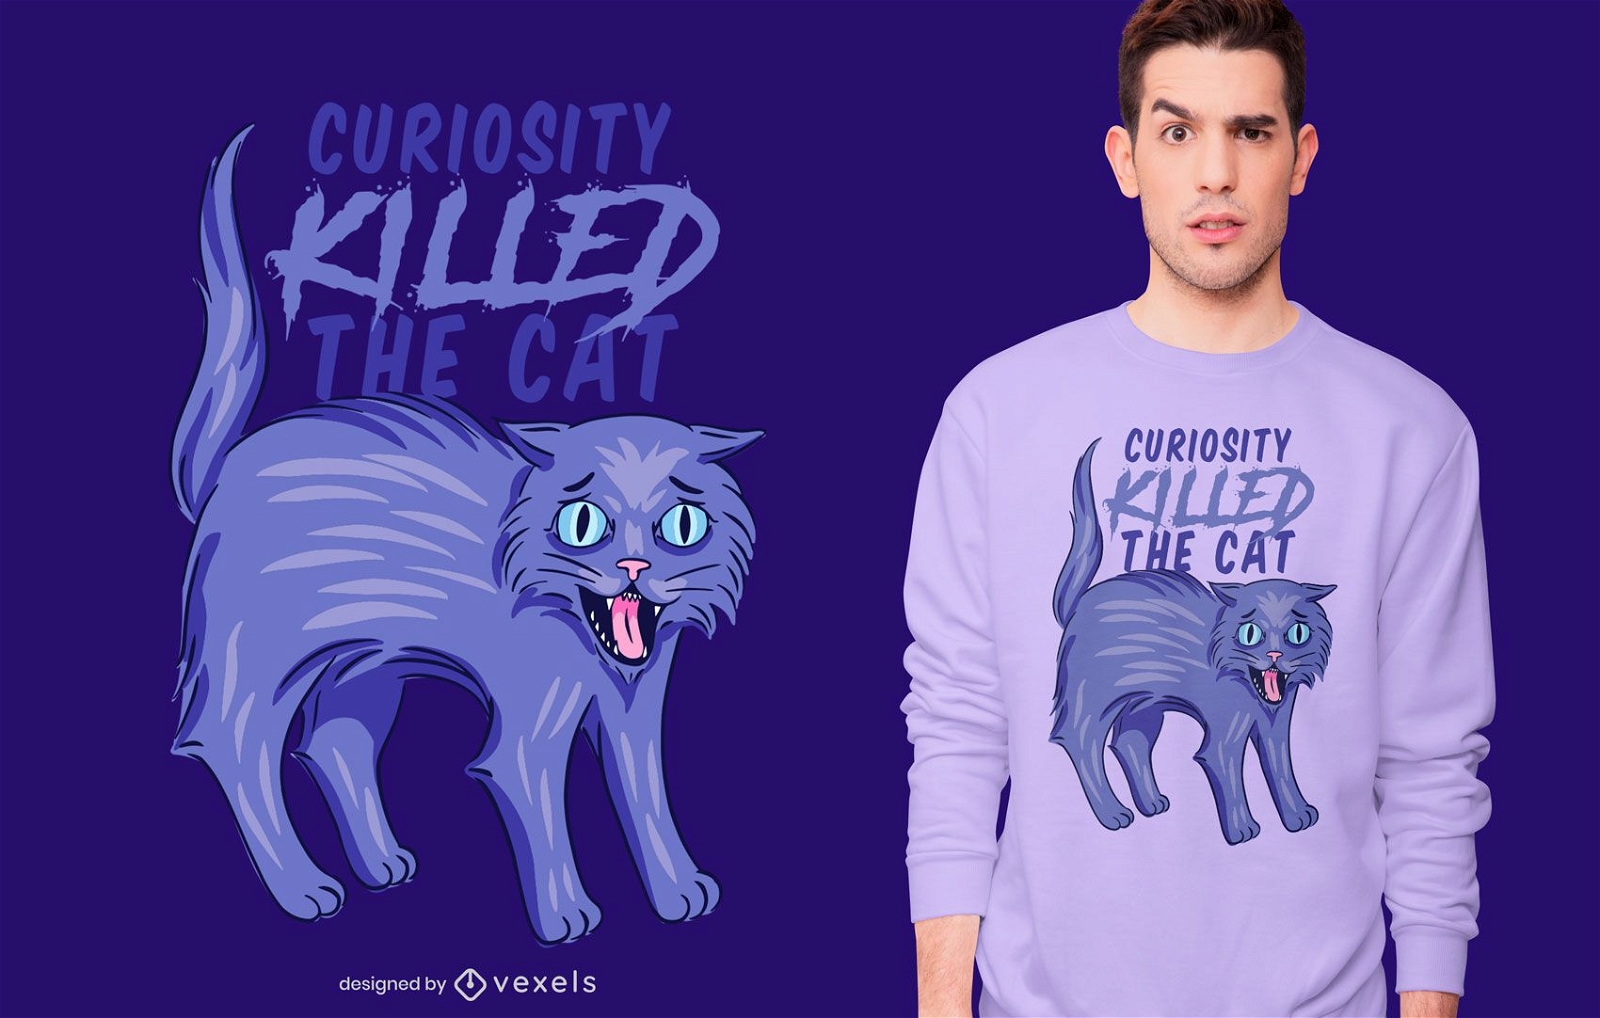 Curiosity killed the cat t-shirt